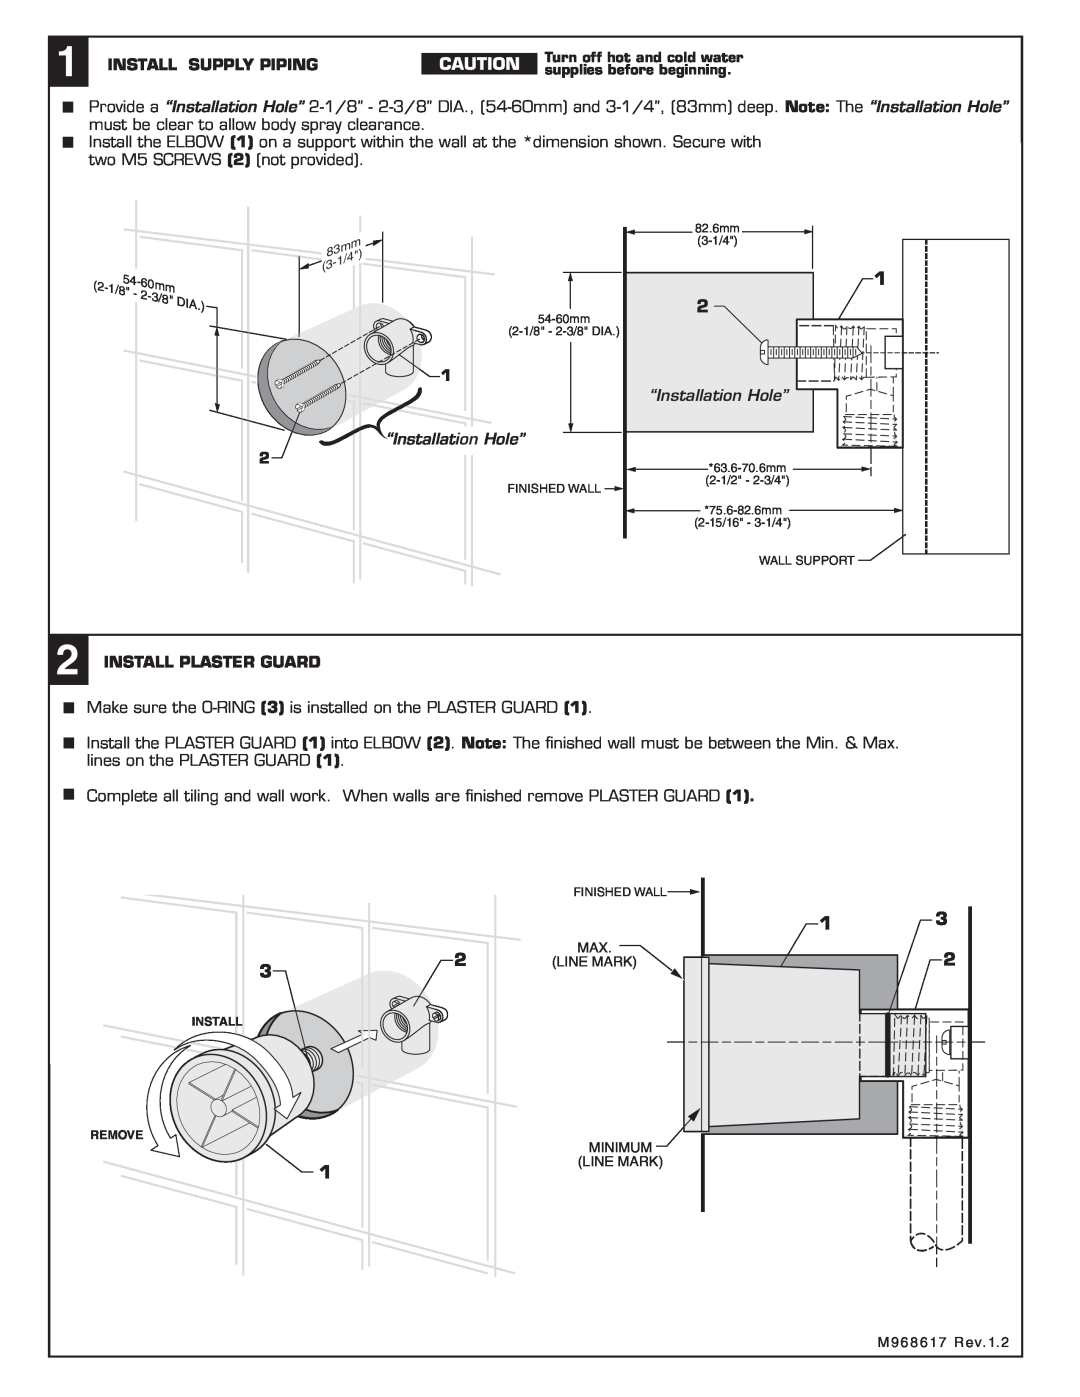 American Standard 1660.14, 1660.13 Install Supply Piping, “Installation Hole”, Install Plaster Guard 